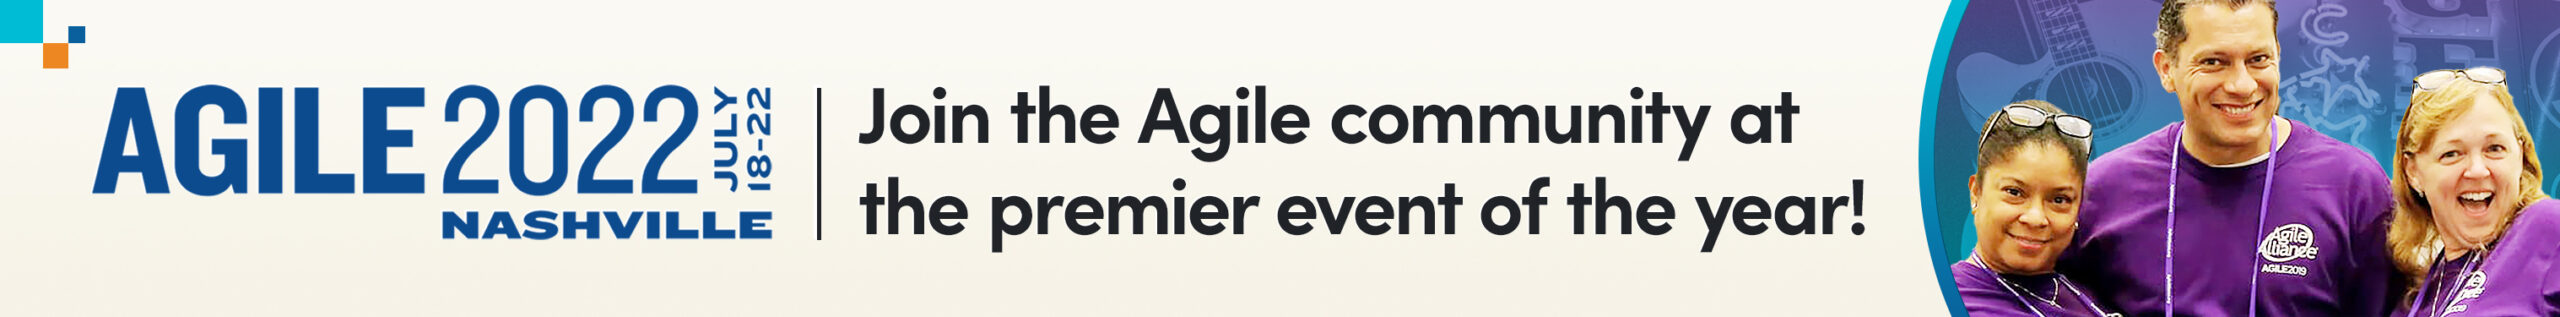 Agile2022 Conference in Nashvilee